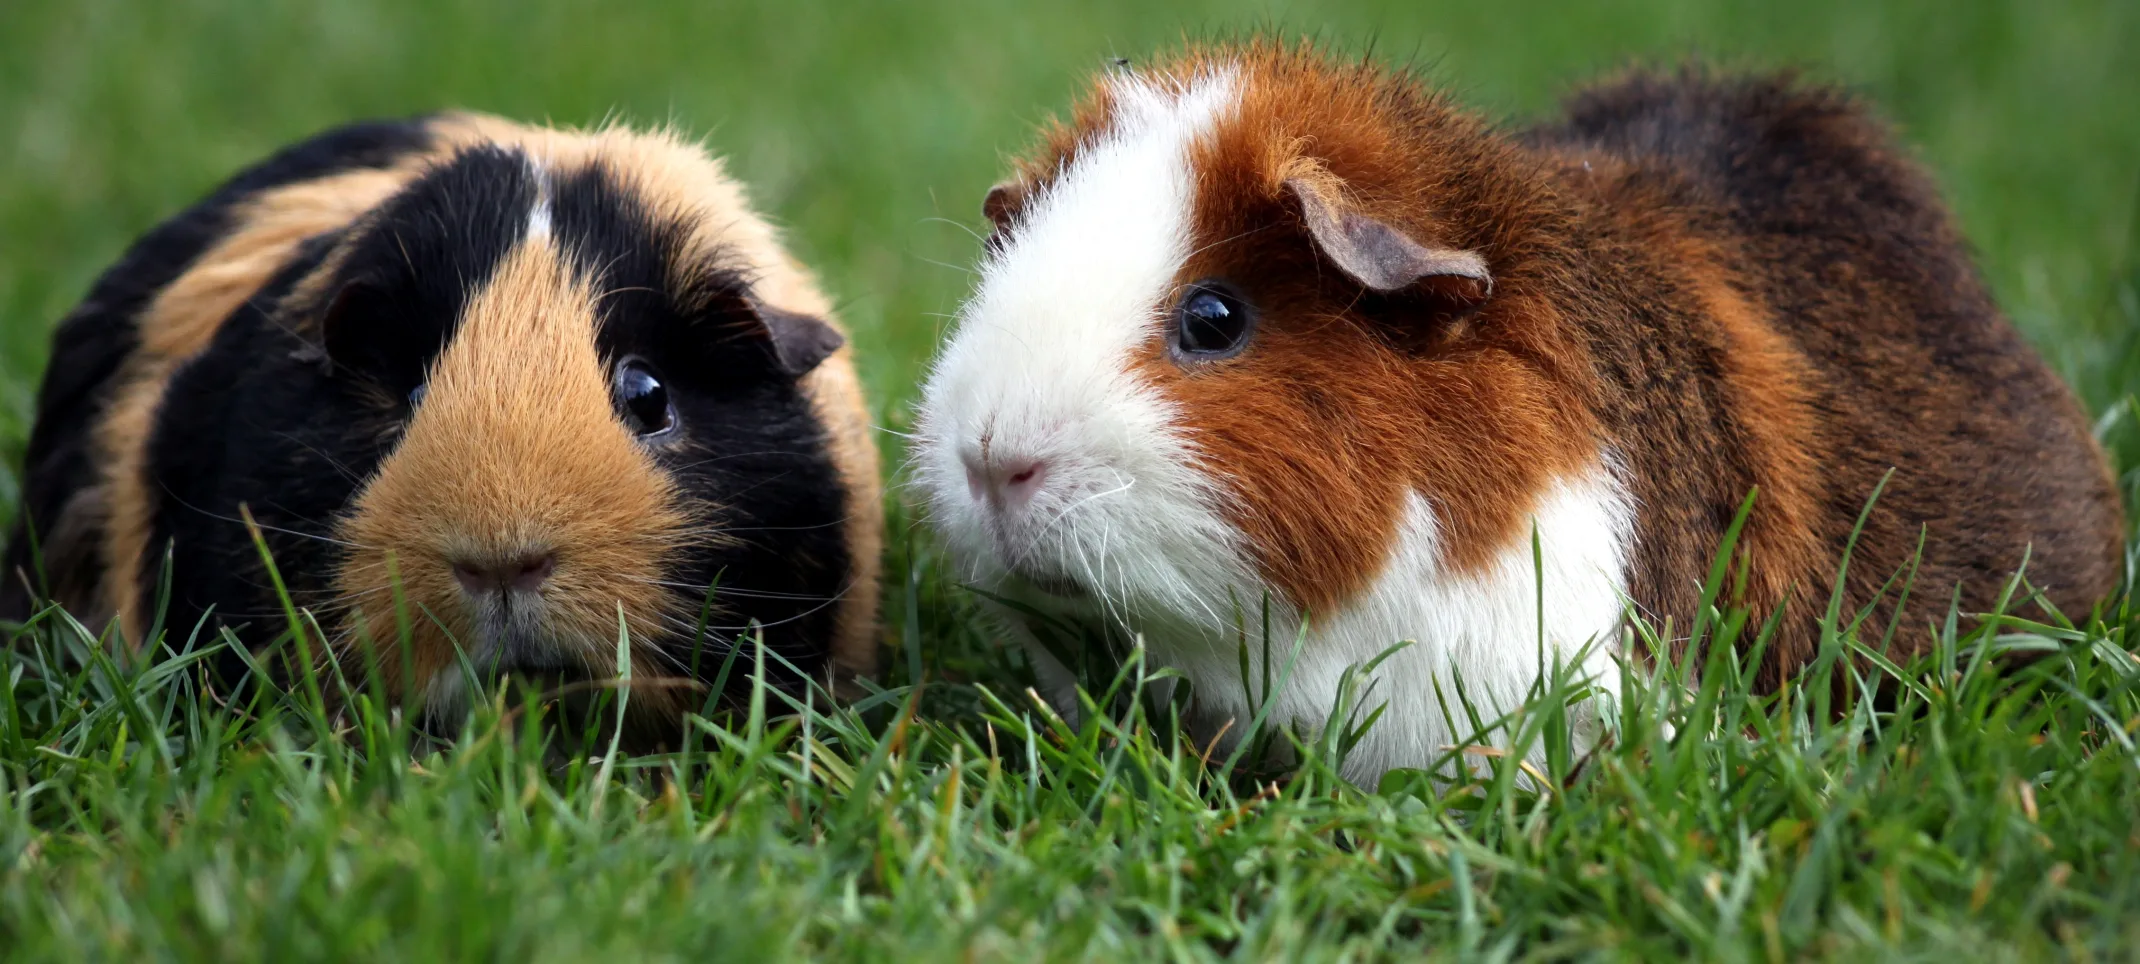 Guinea Pigs sitting in grass